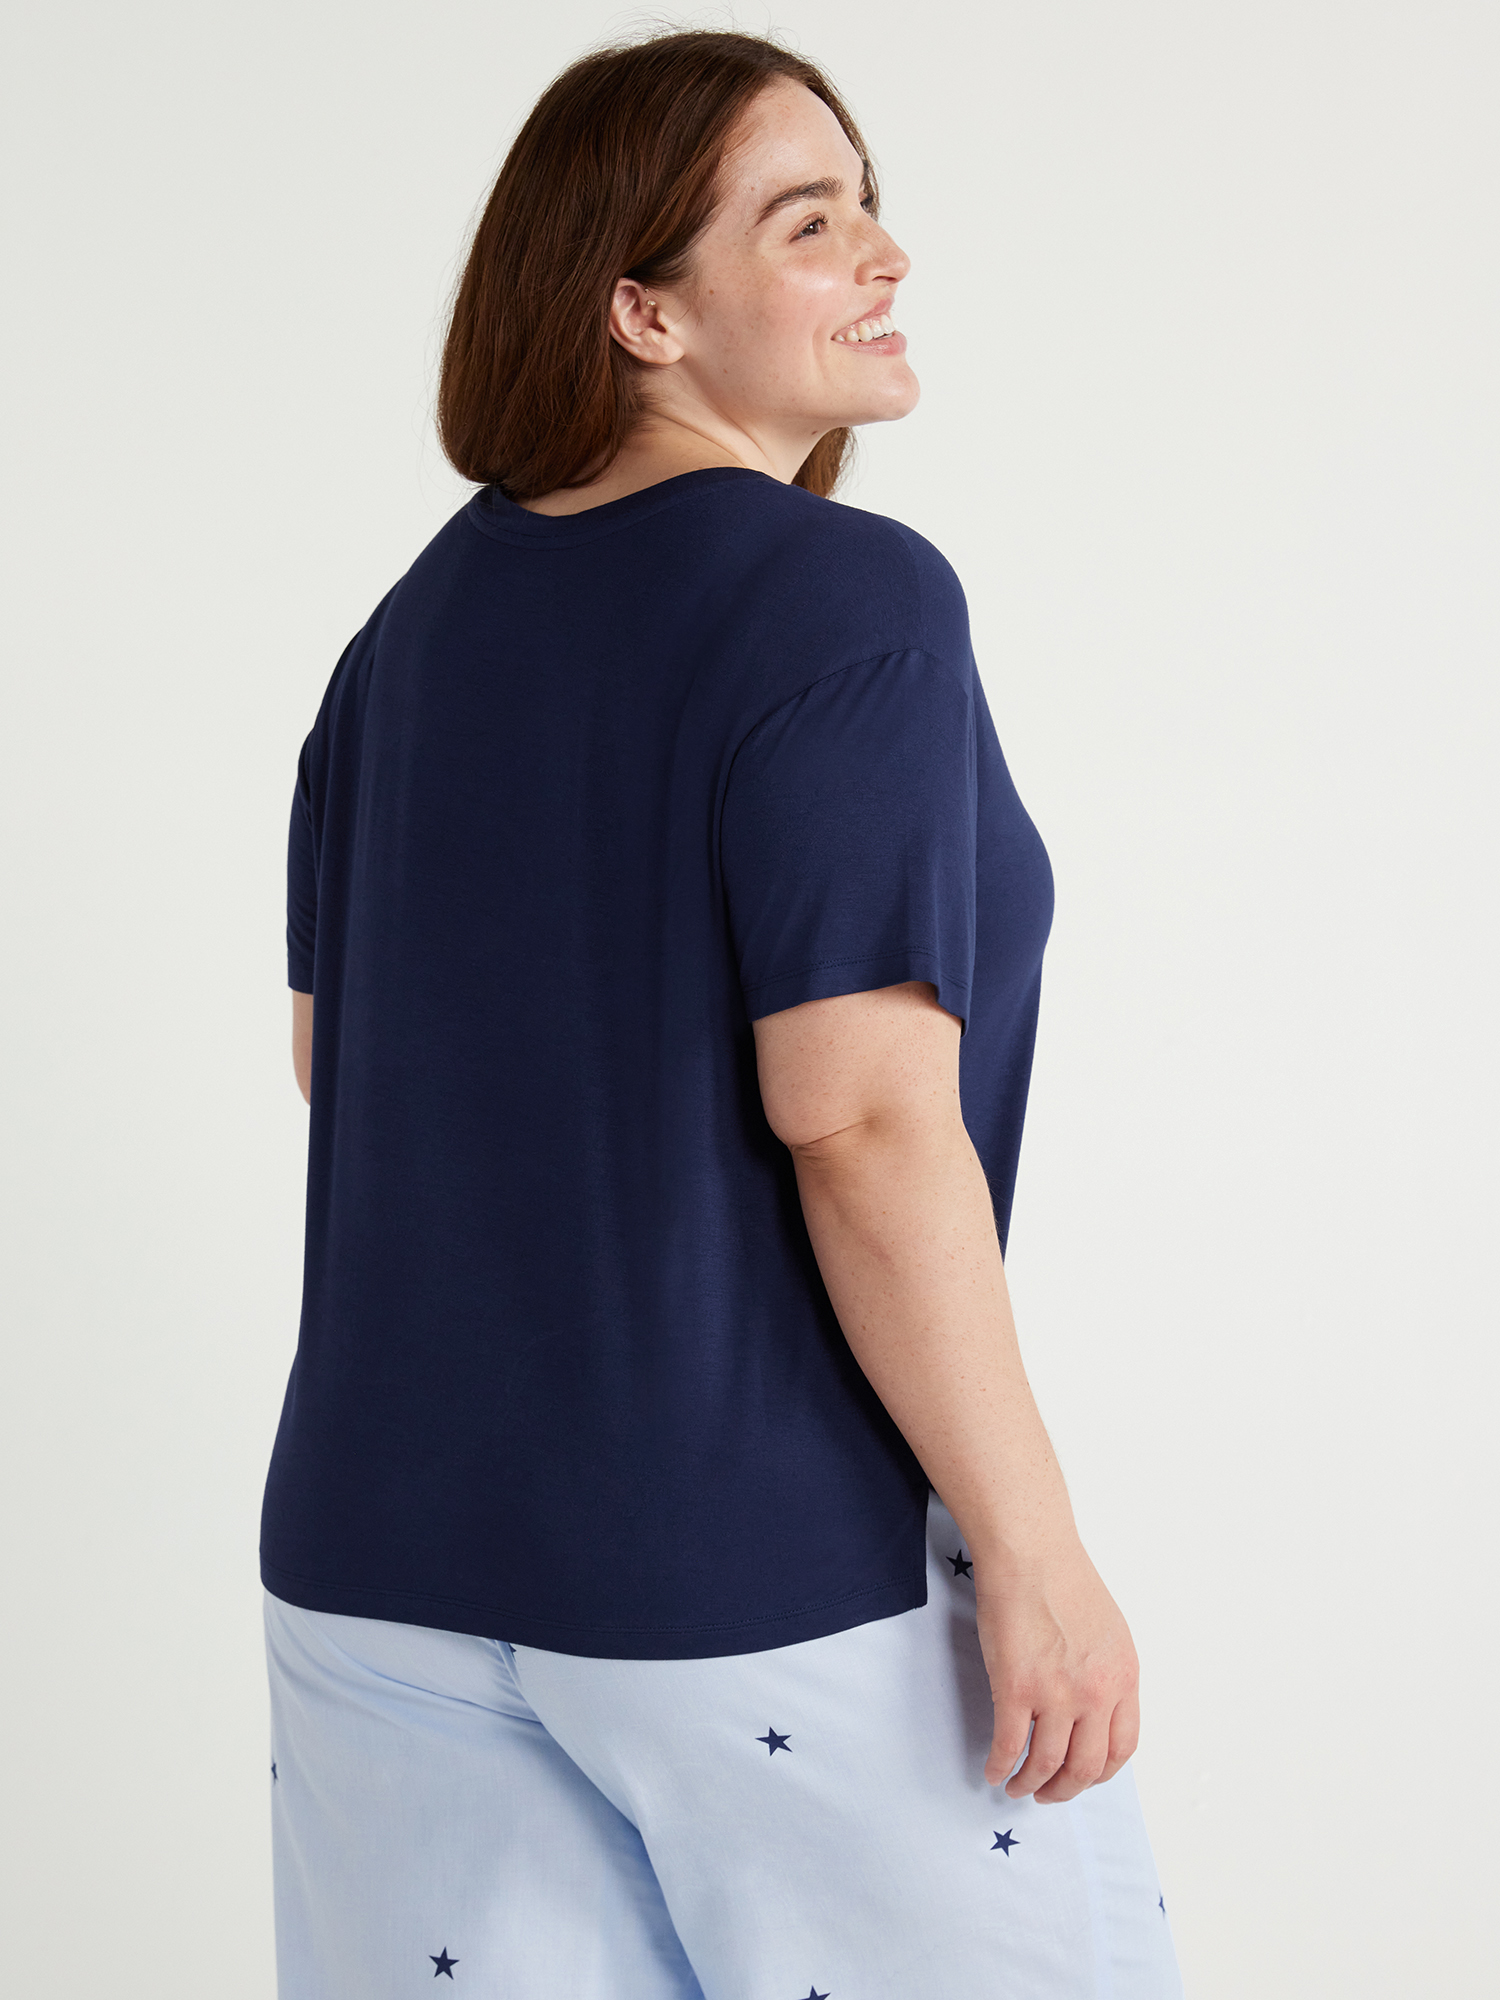 Joyspun Women's Short Sleeve Knit Sleep T-Shirt, Sizes S to 3X - image 5 of 7